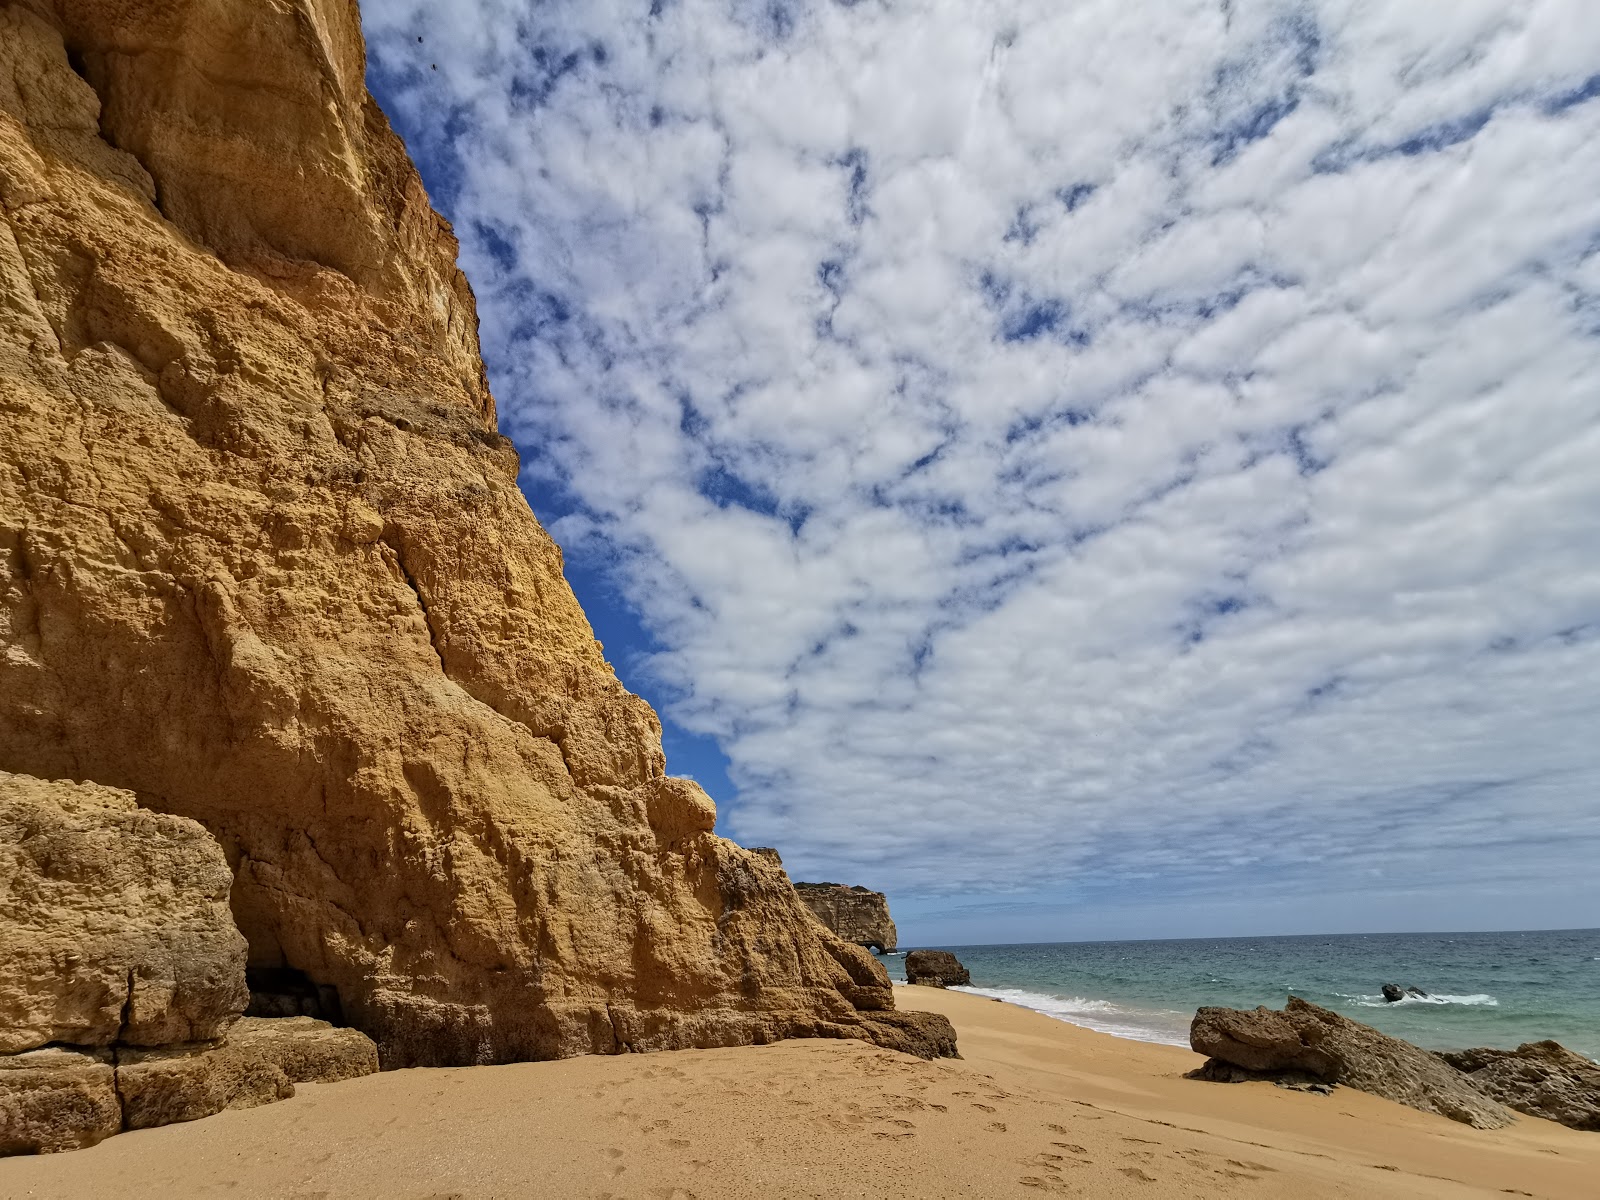 Fotografie cu Praia da Afurada - locul popular printre cunoscătorii de relaxare